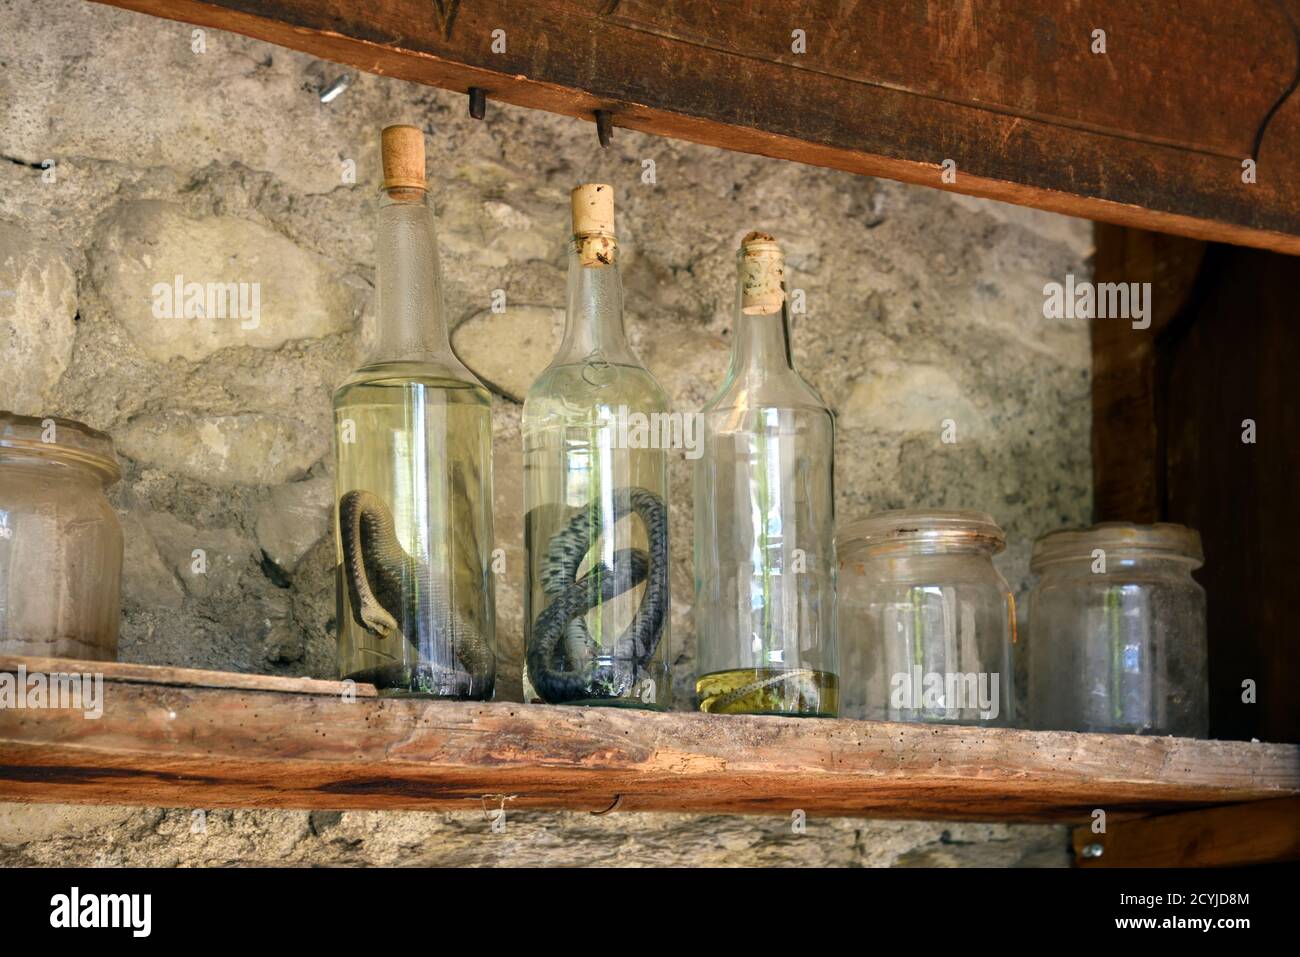 Snakes Preserved in Glass Bottles Historically Used as Folk Medicine or Snake Oil Stock Photo